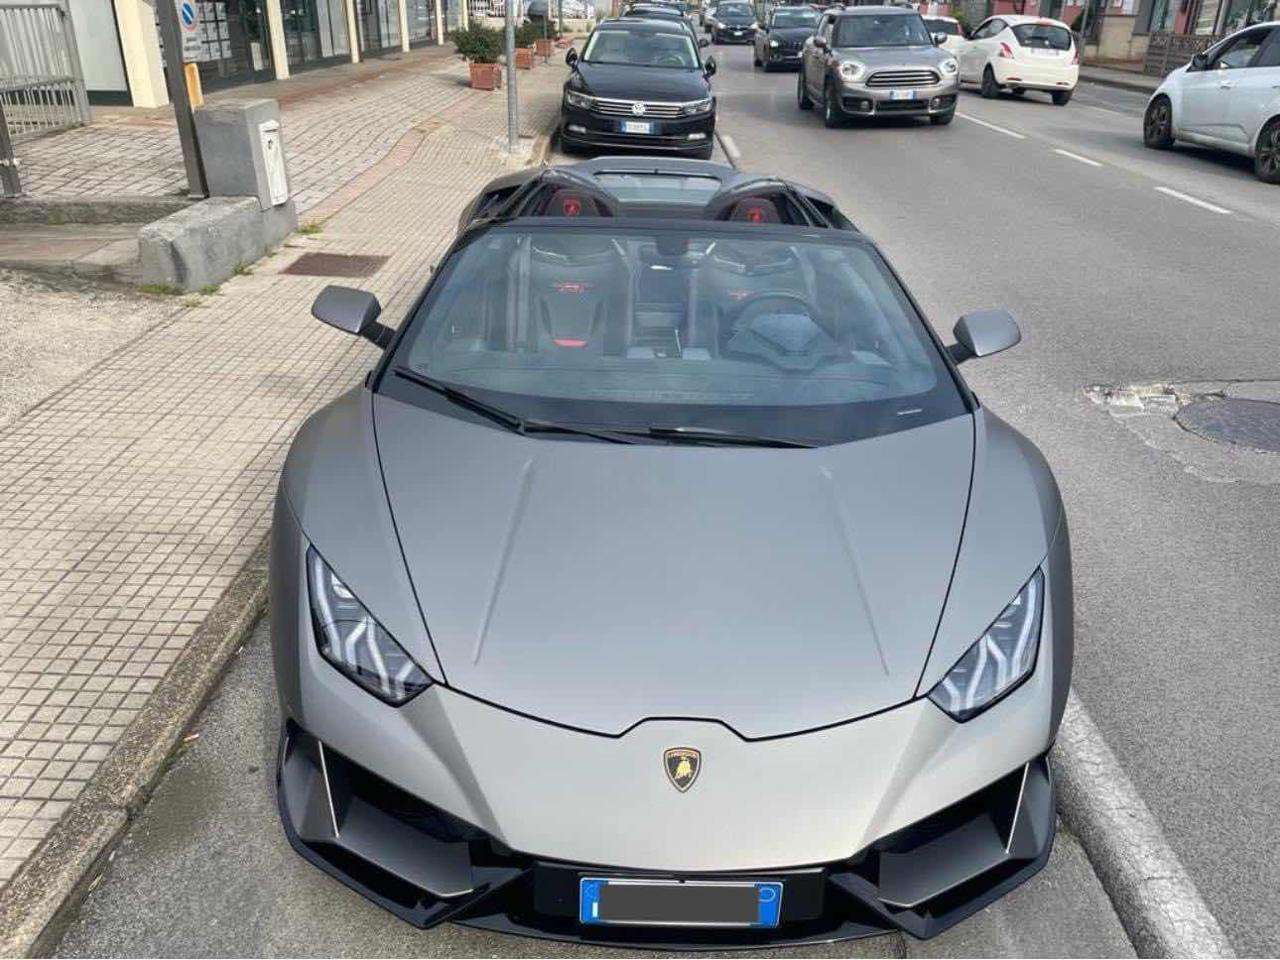 Lamborghini Huracan Convertible in Grey used in Pieve a Nievole -Pt for € 400,000.-